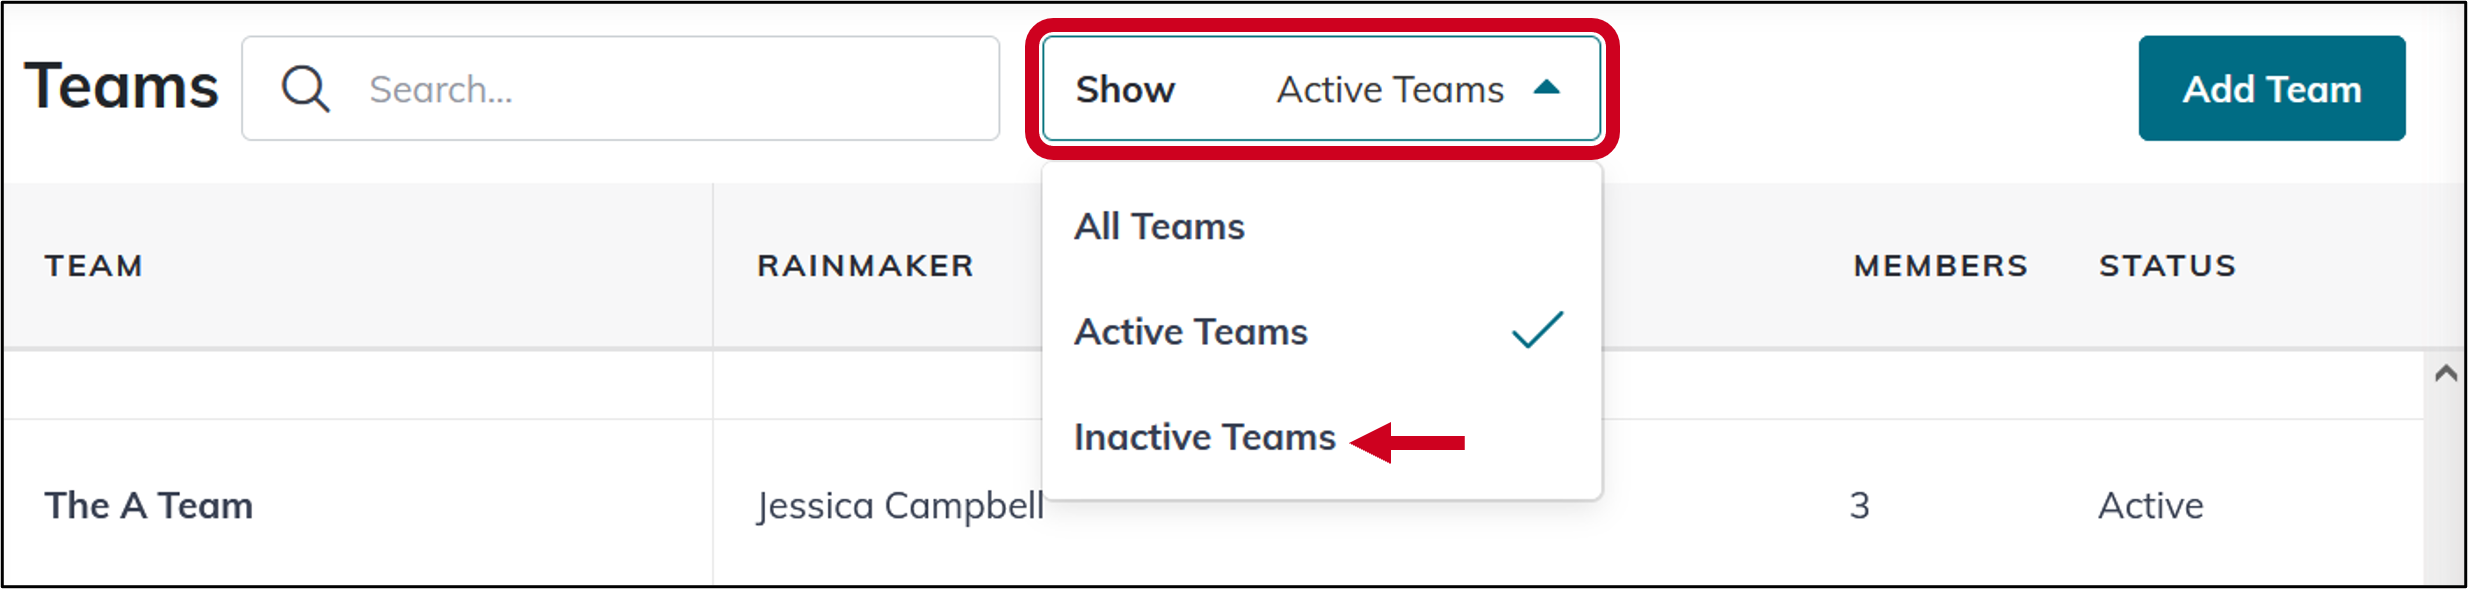 cmc_admin_teams_inactive_teams_filter.png